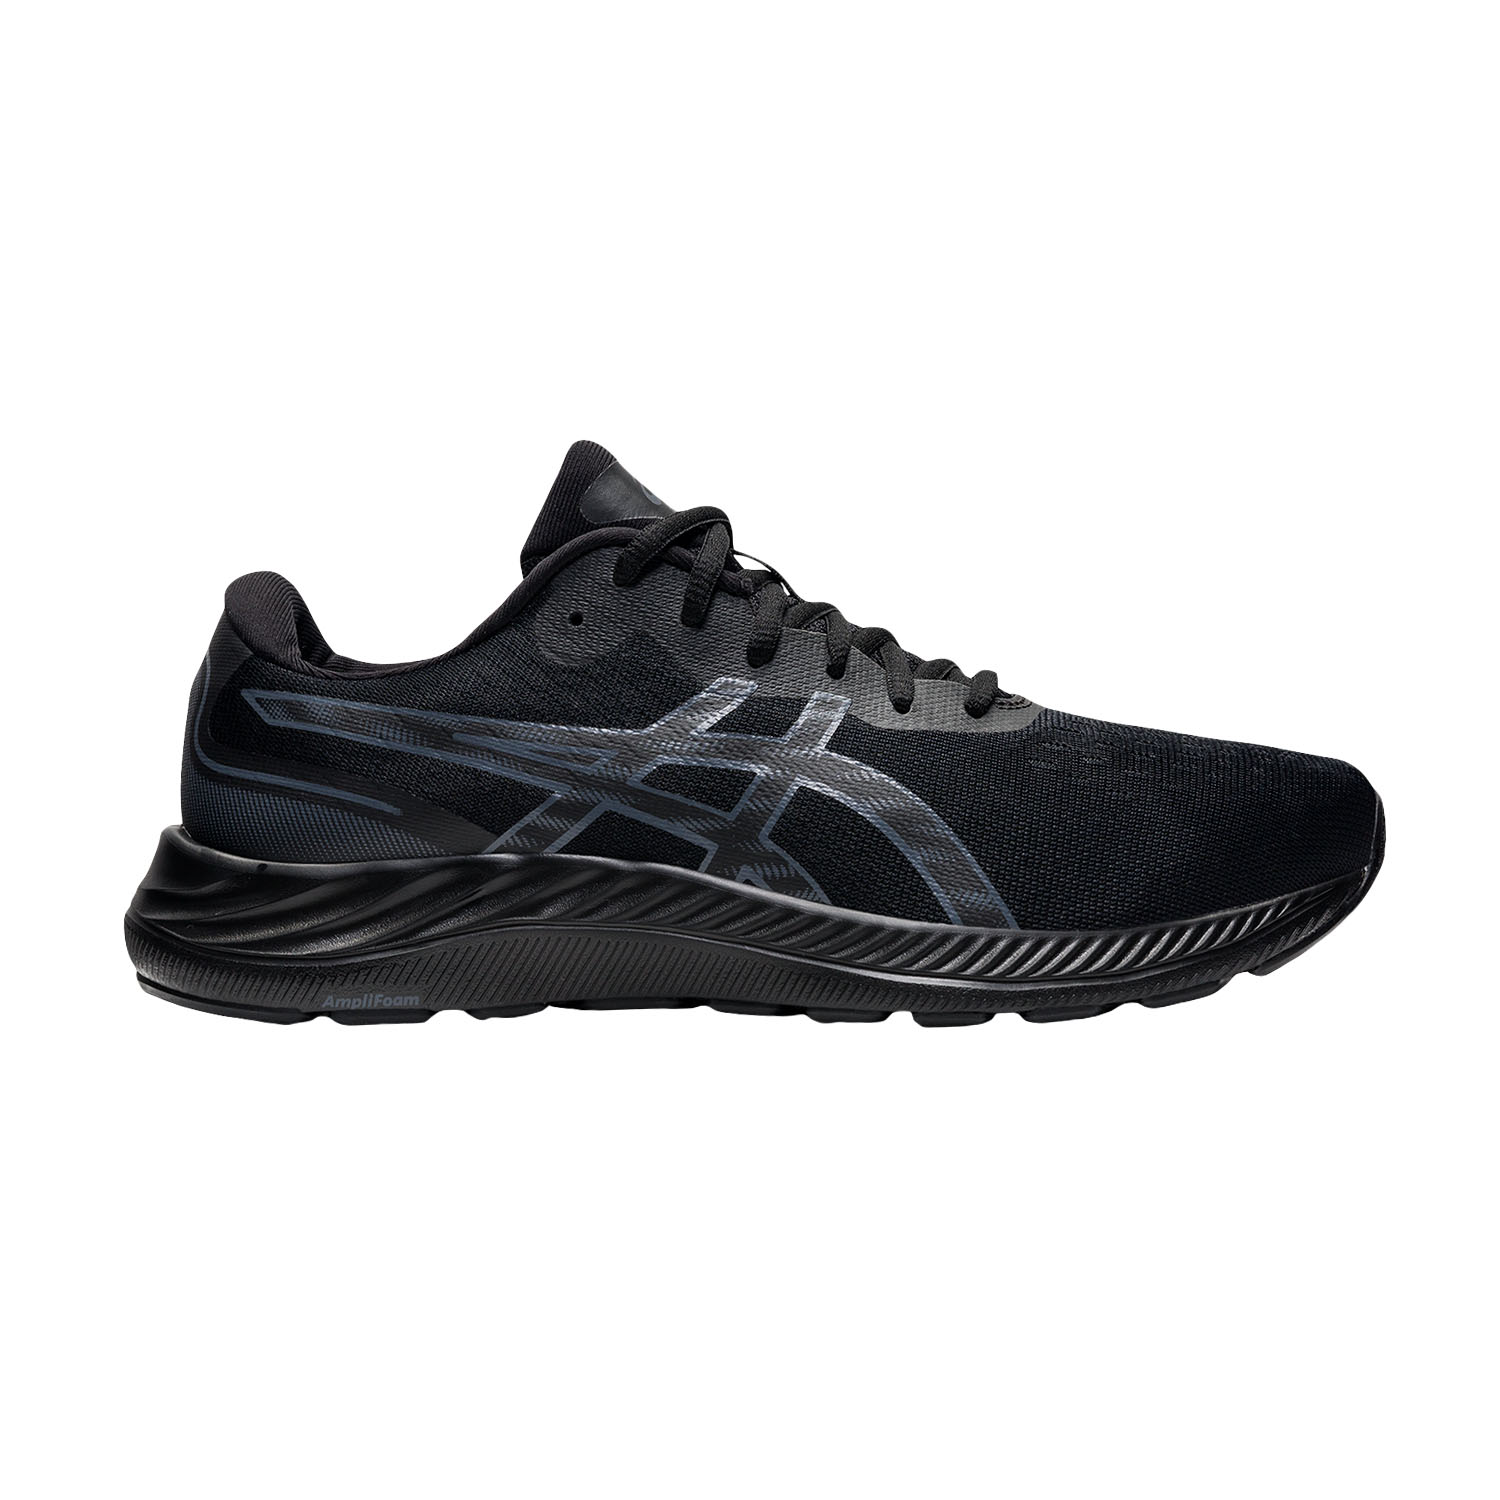 Asics Gel Excite 9 Men's Running Shoes - Black/Carrier Grey